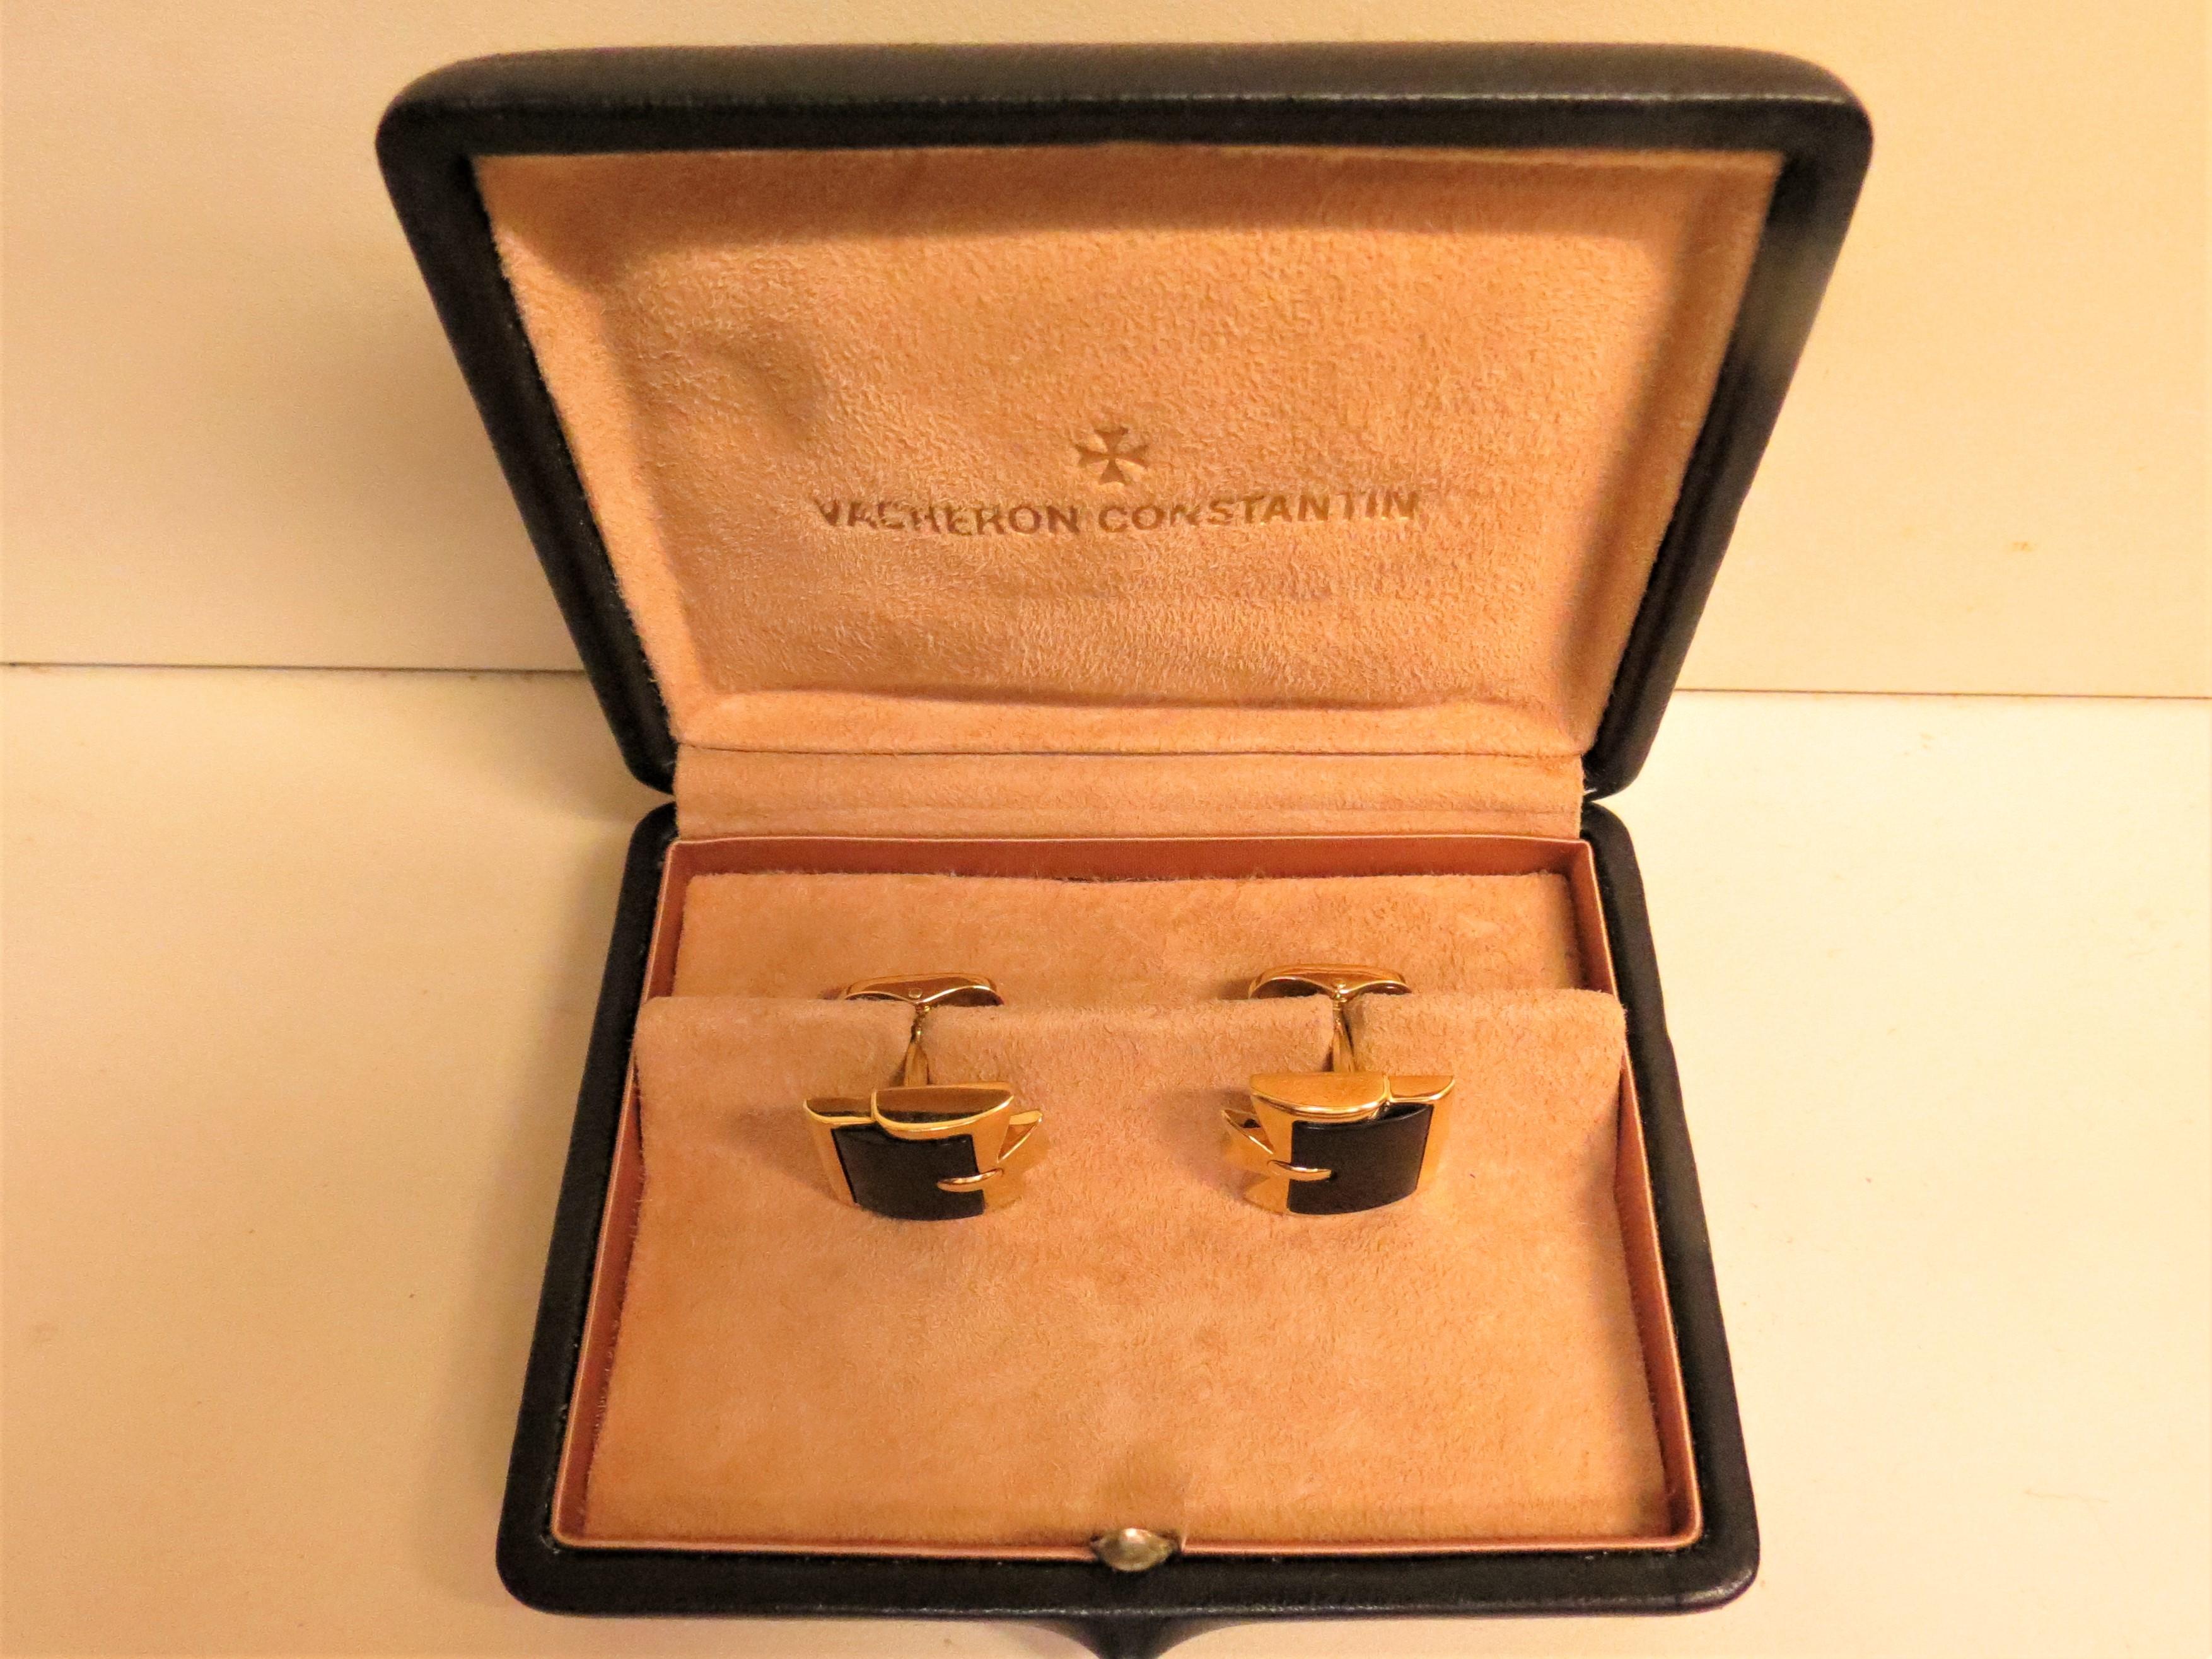 18K yellow gold and black onyx Vacheron Constantin cufflinks in Vacheron Constantin box.